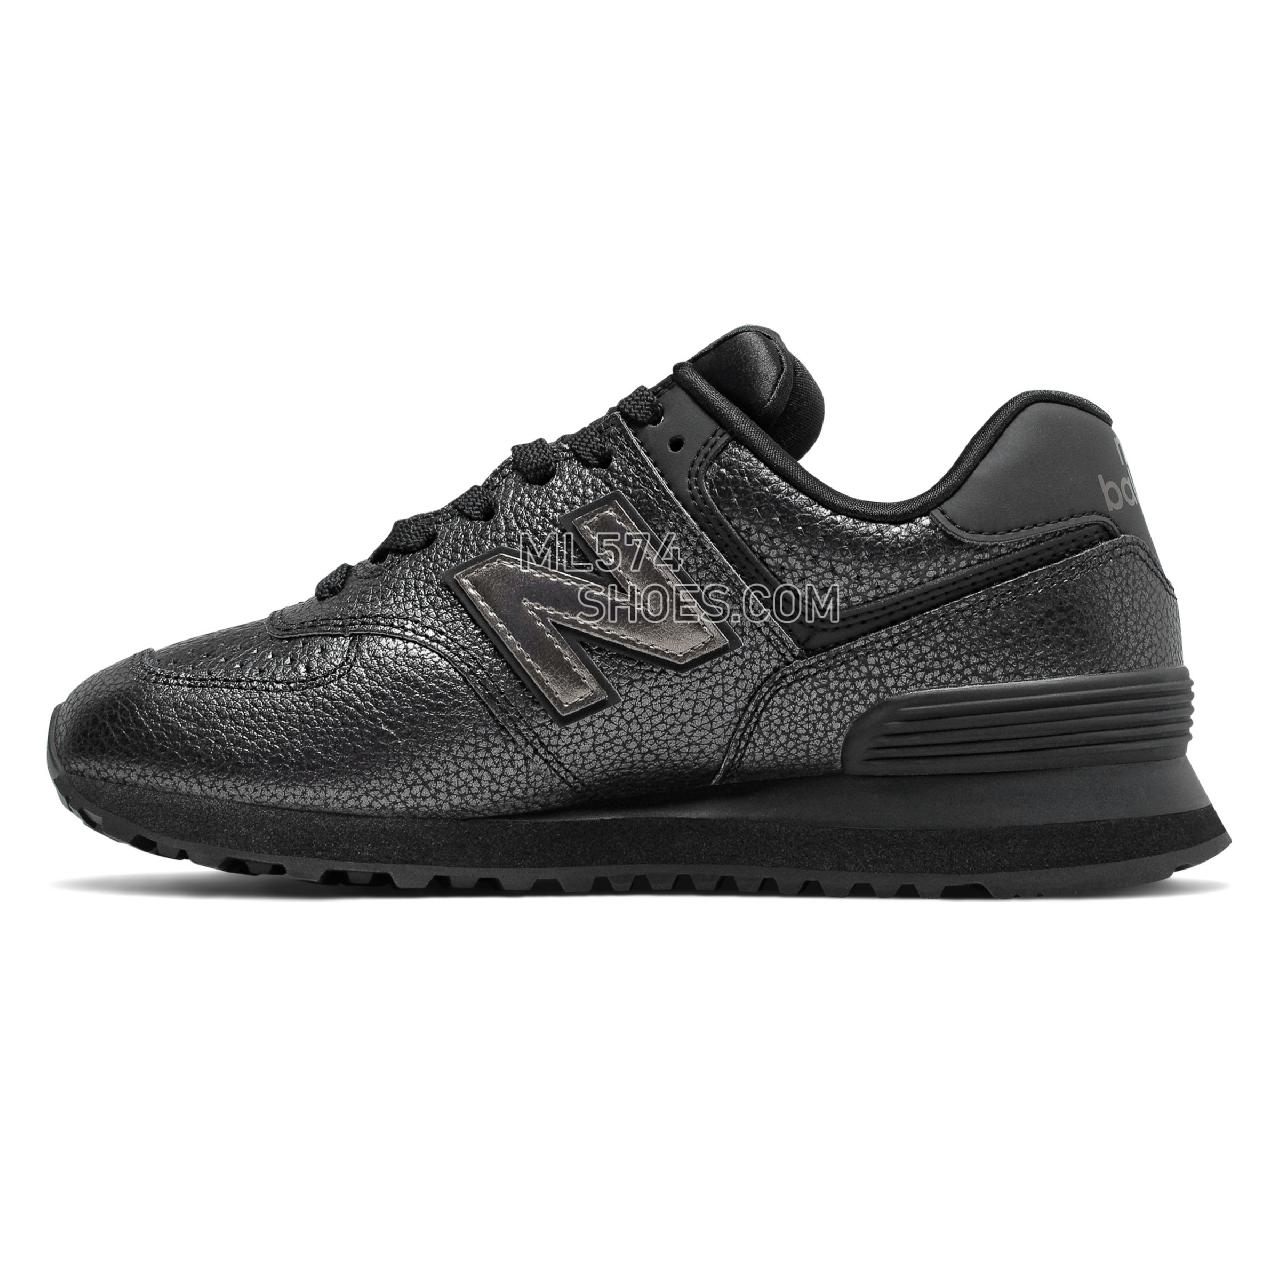 New Balance 574 Worn Metallic - Women's Classic Sneakers - Black with Black Metallic - WL574SOH